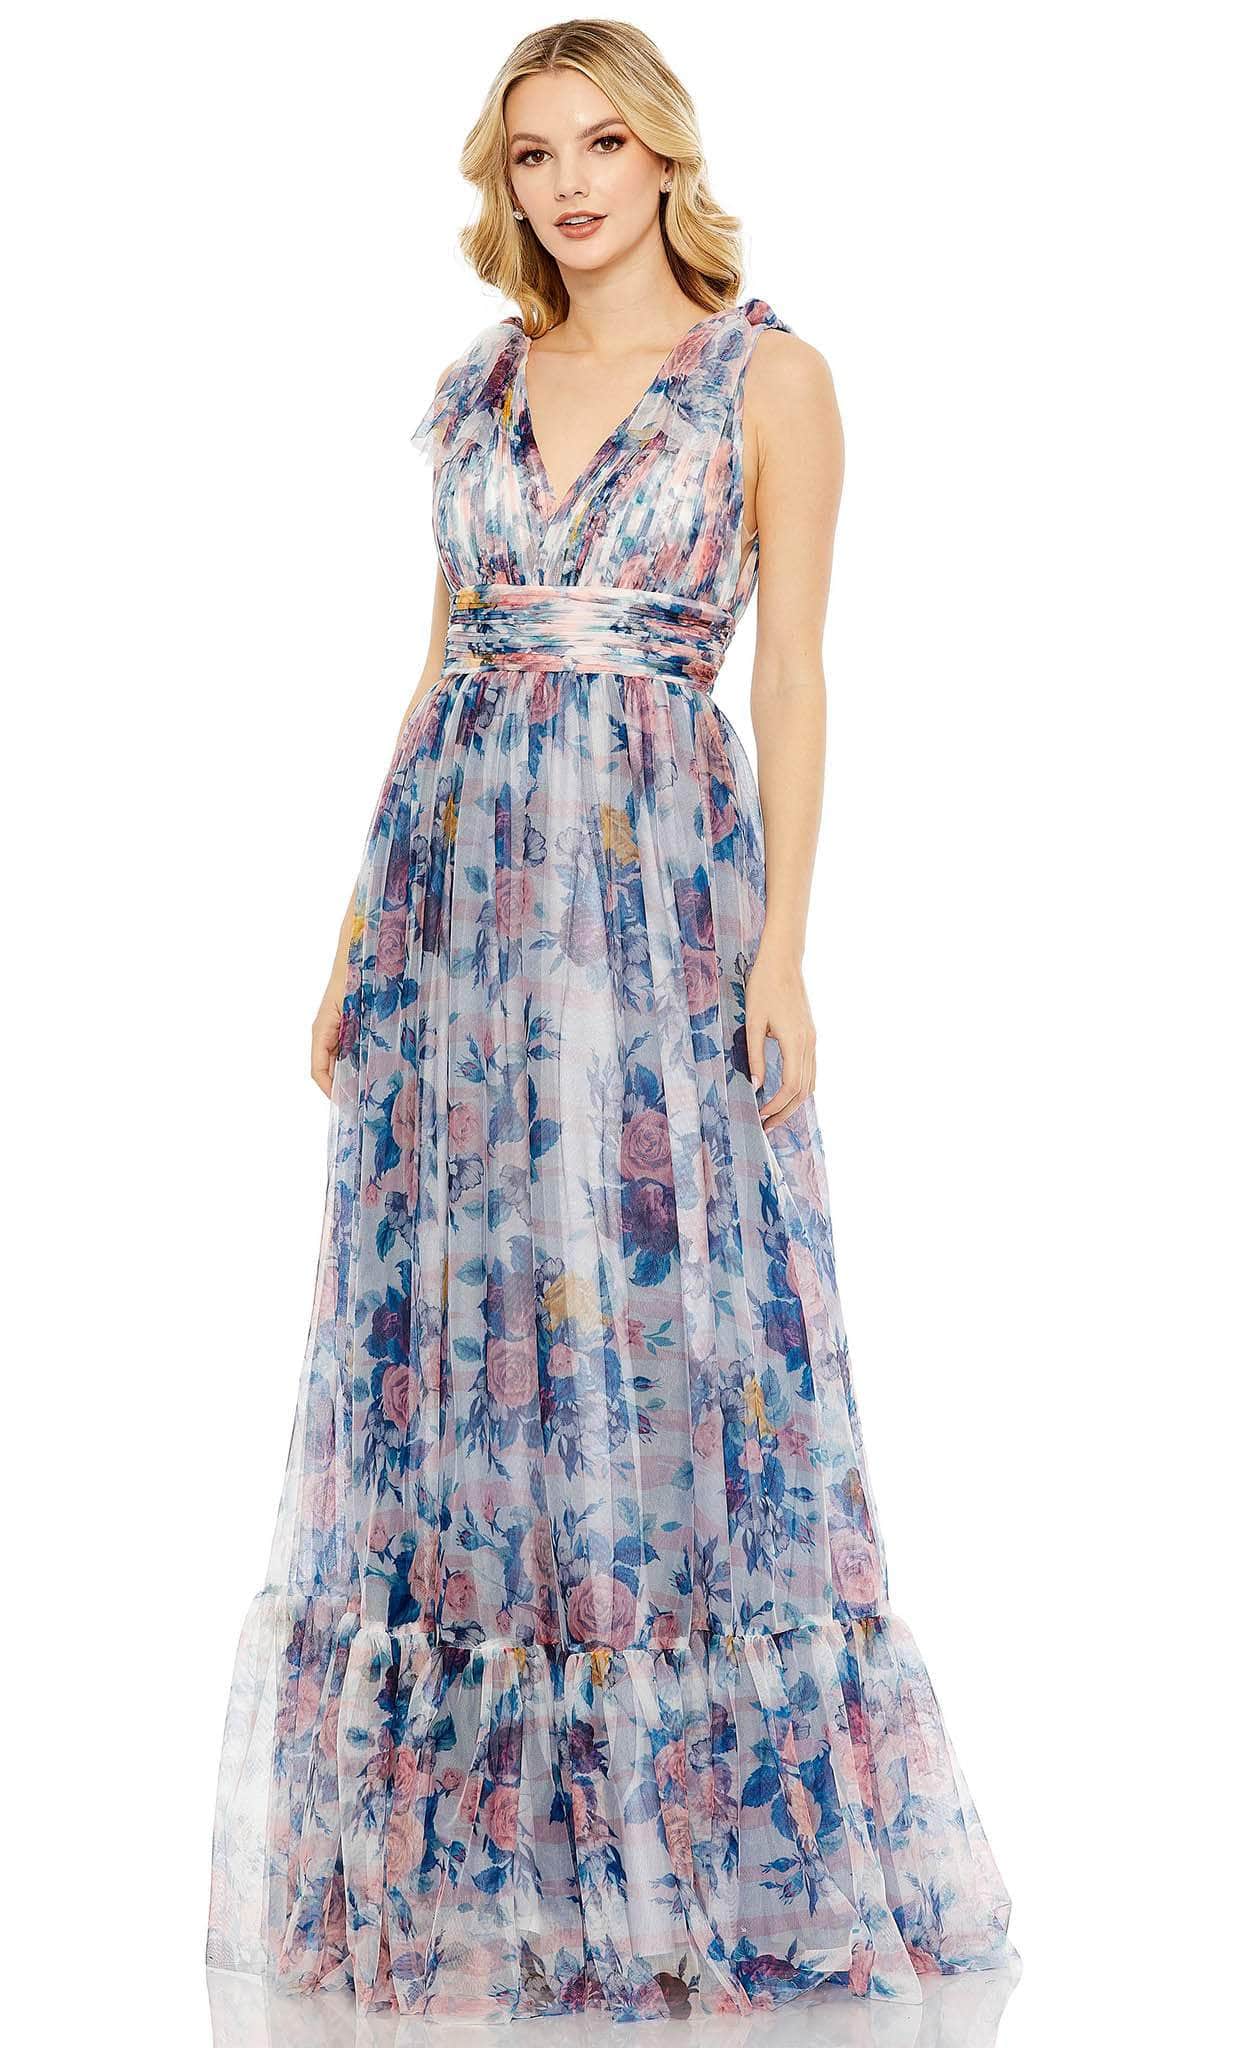 Mac Duggal 11332 - Chiffon Tiered Formal Dress Special Occasion Dress 2 / Blue Multi